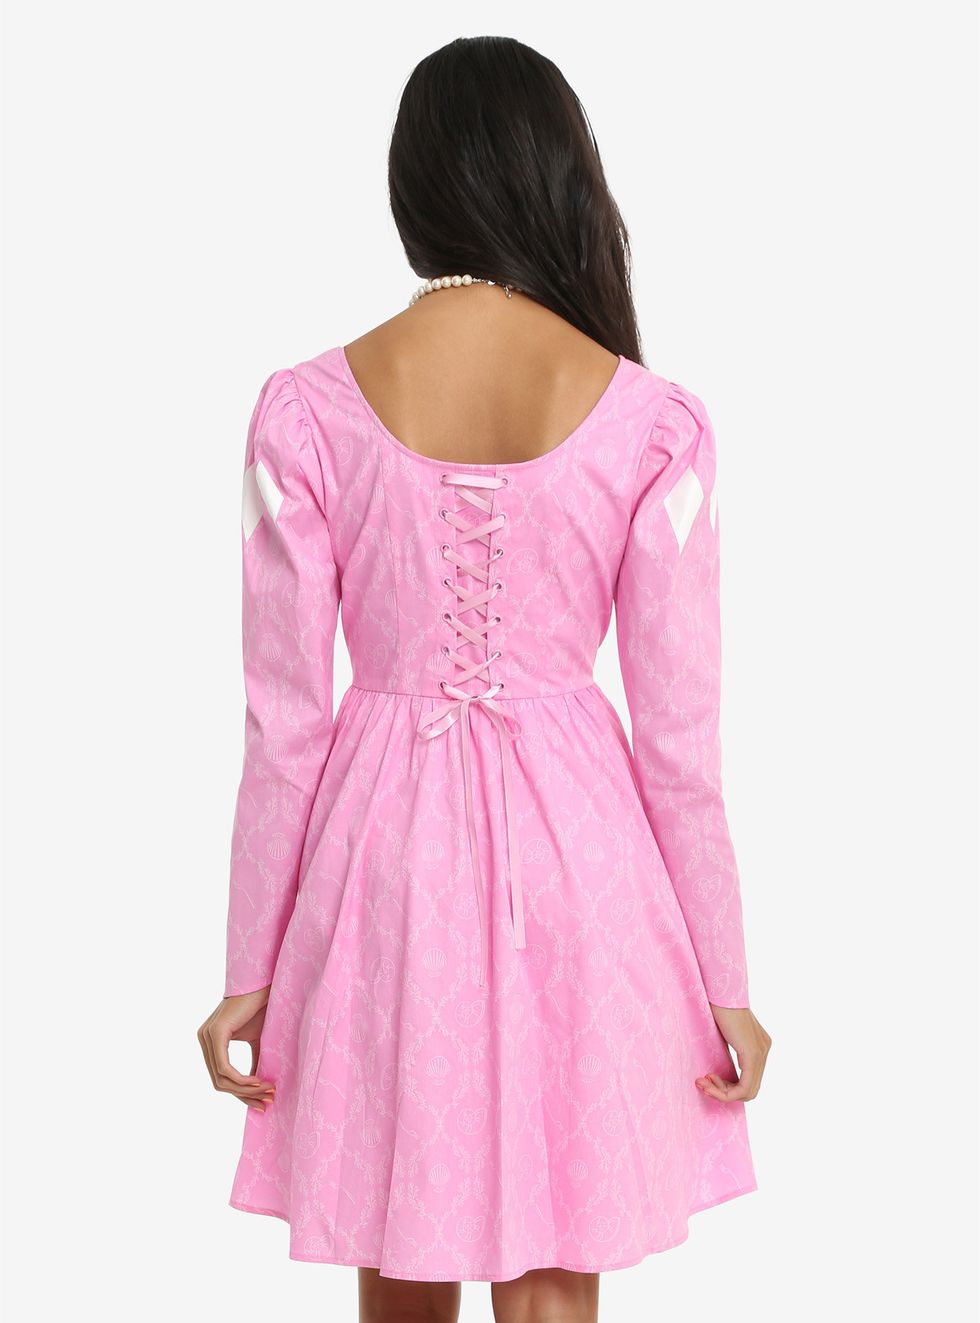 Ariel pink dress